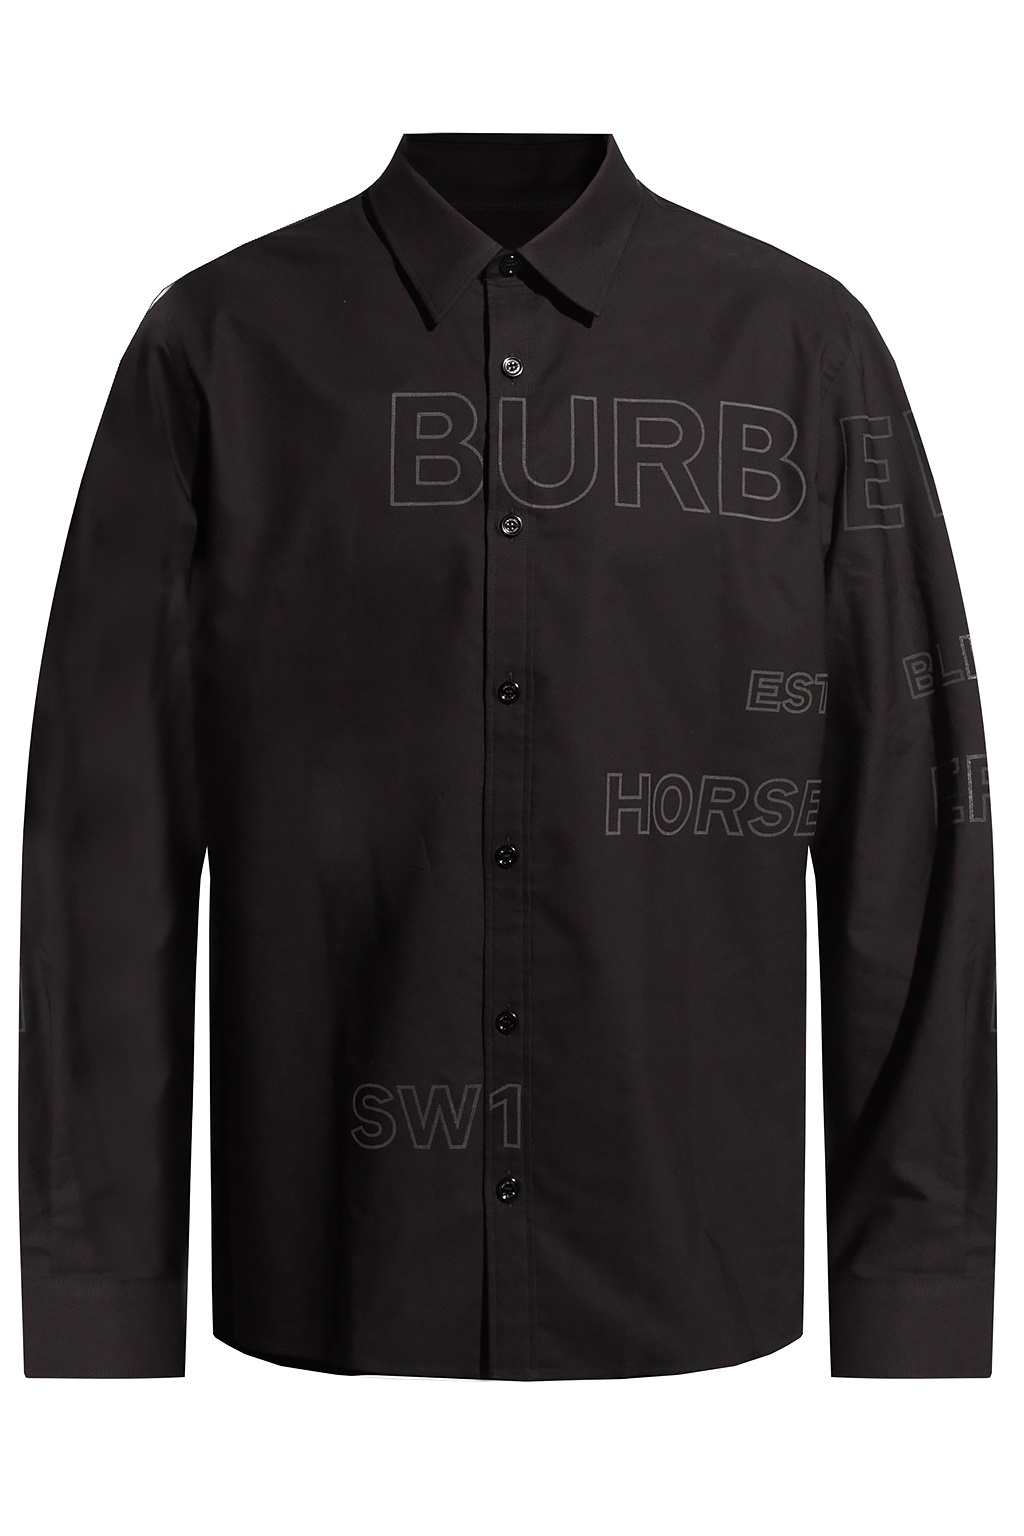 Burberry strap burberry reversible check pattern jacket item